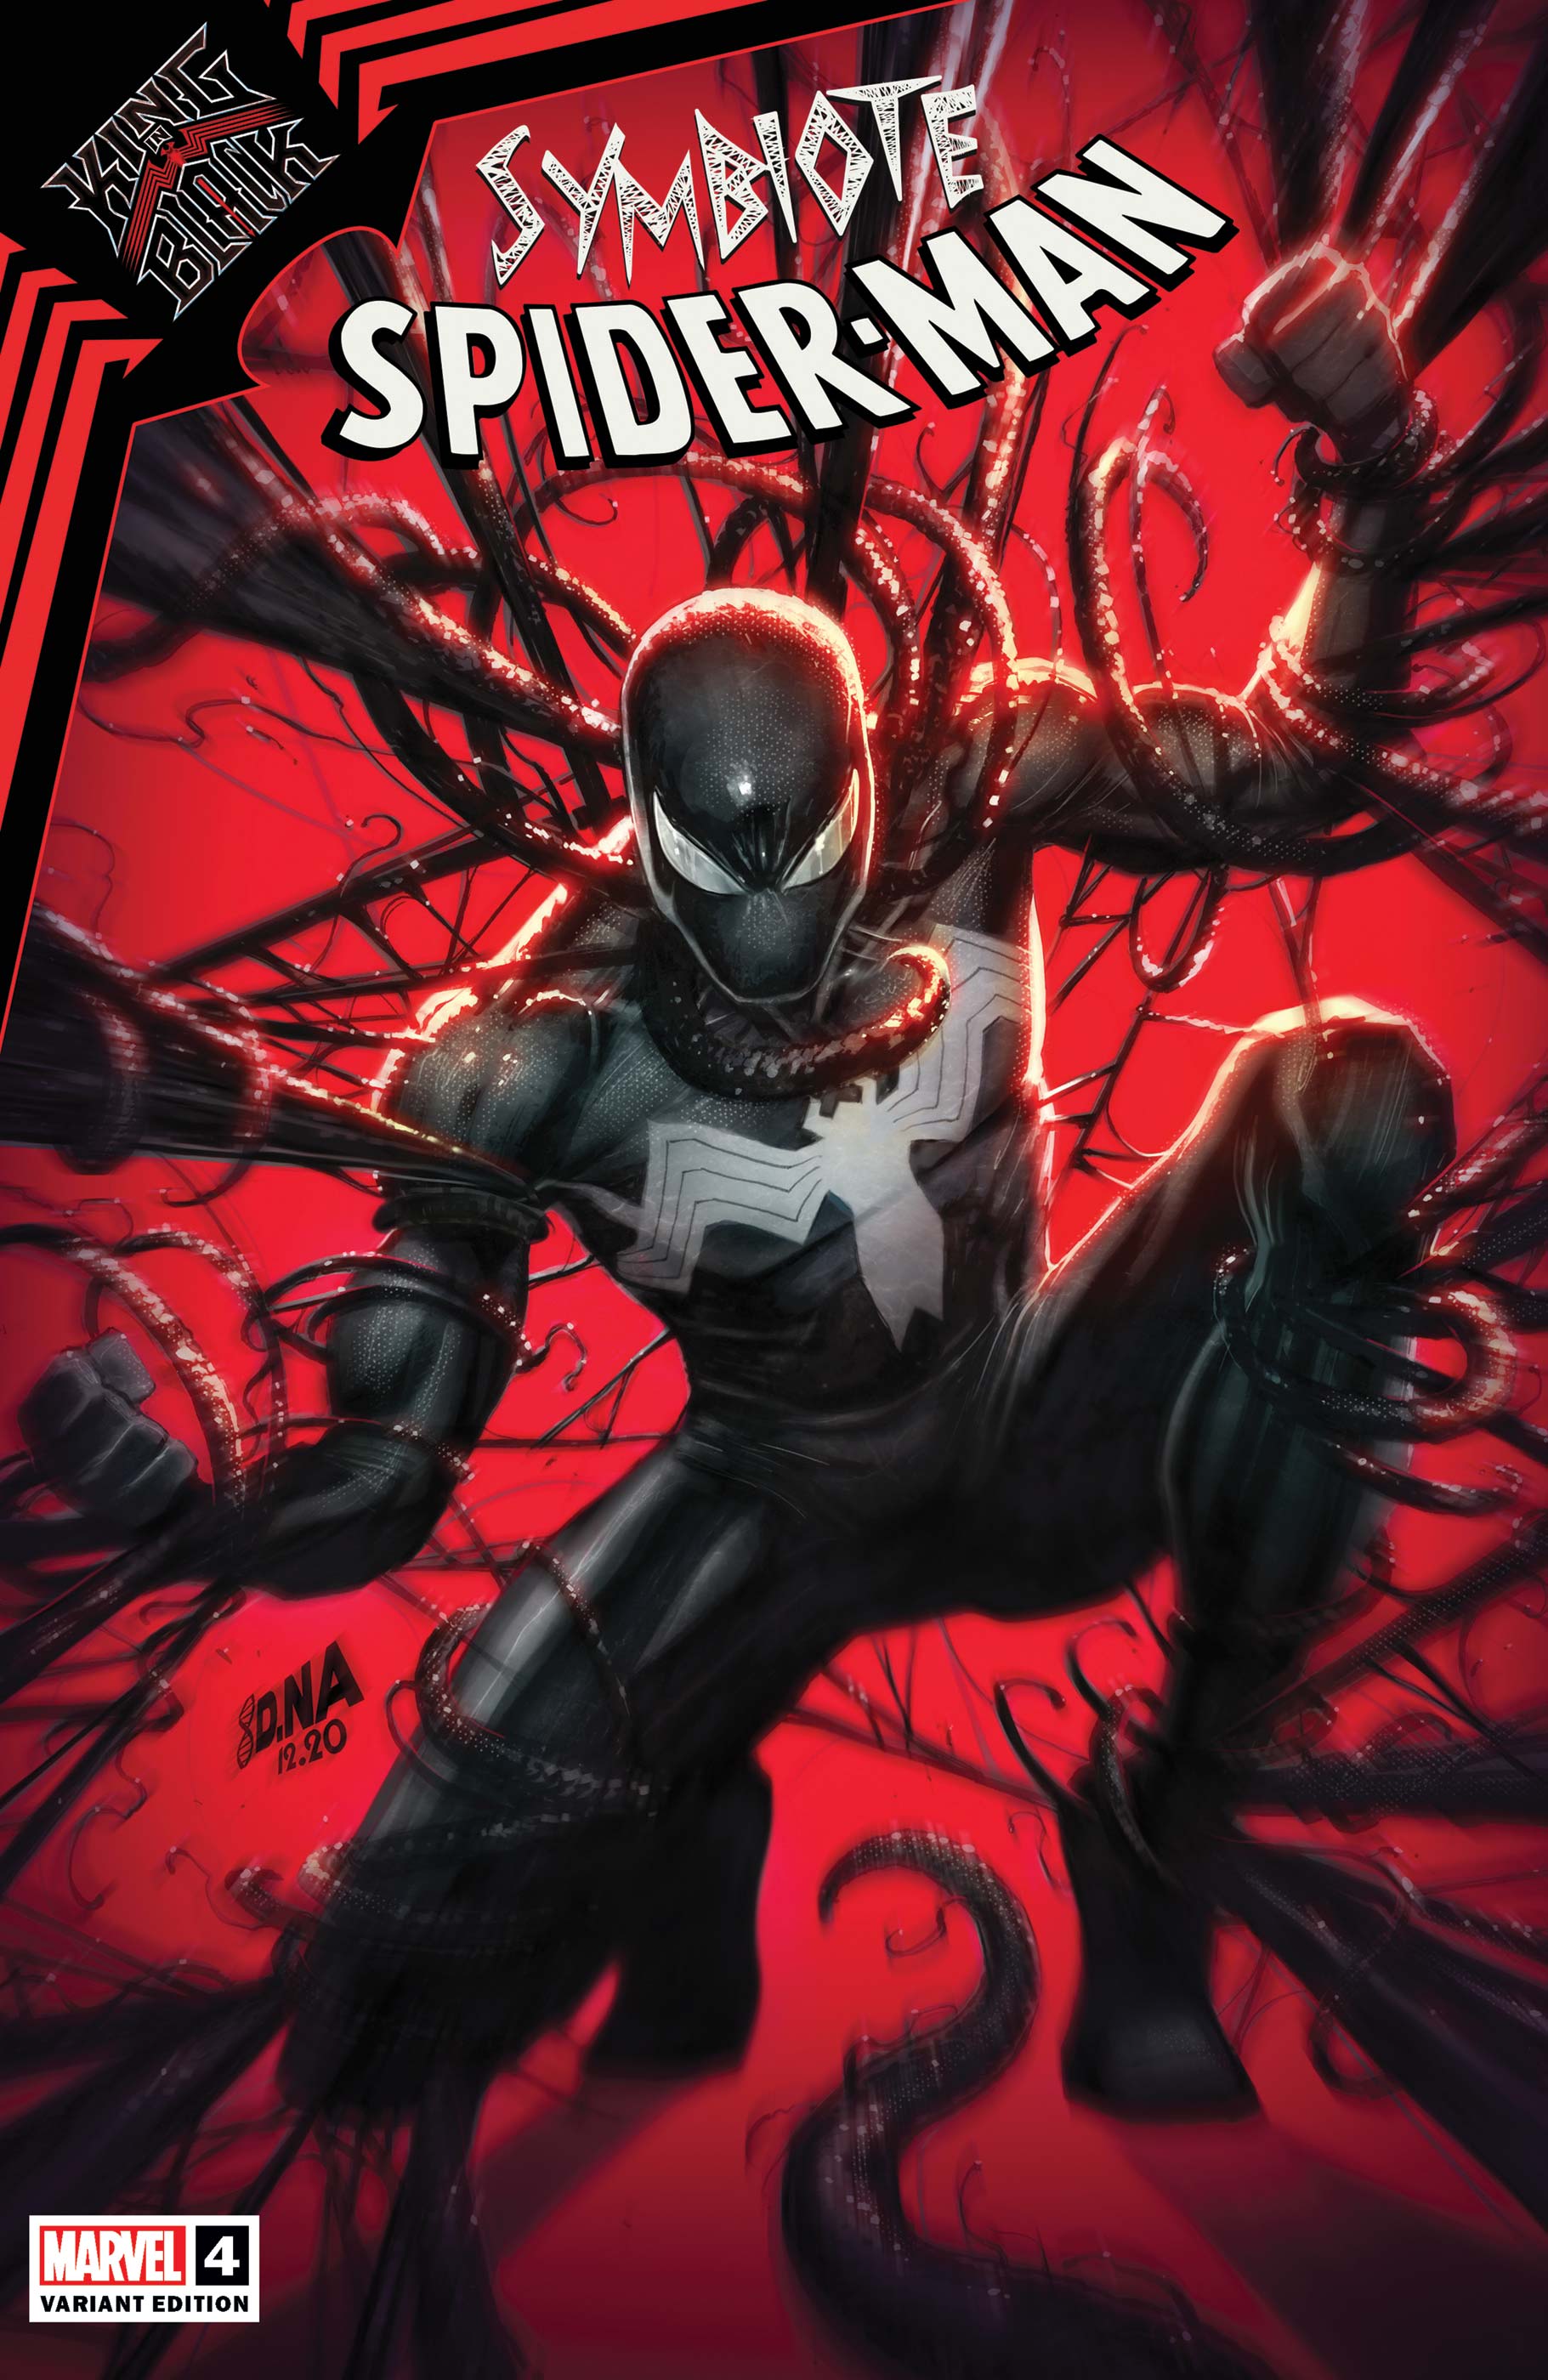 Symbiote Spider-Man: King in Black (2020) #4 (Variant)